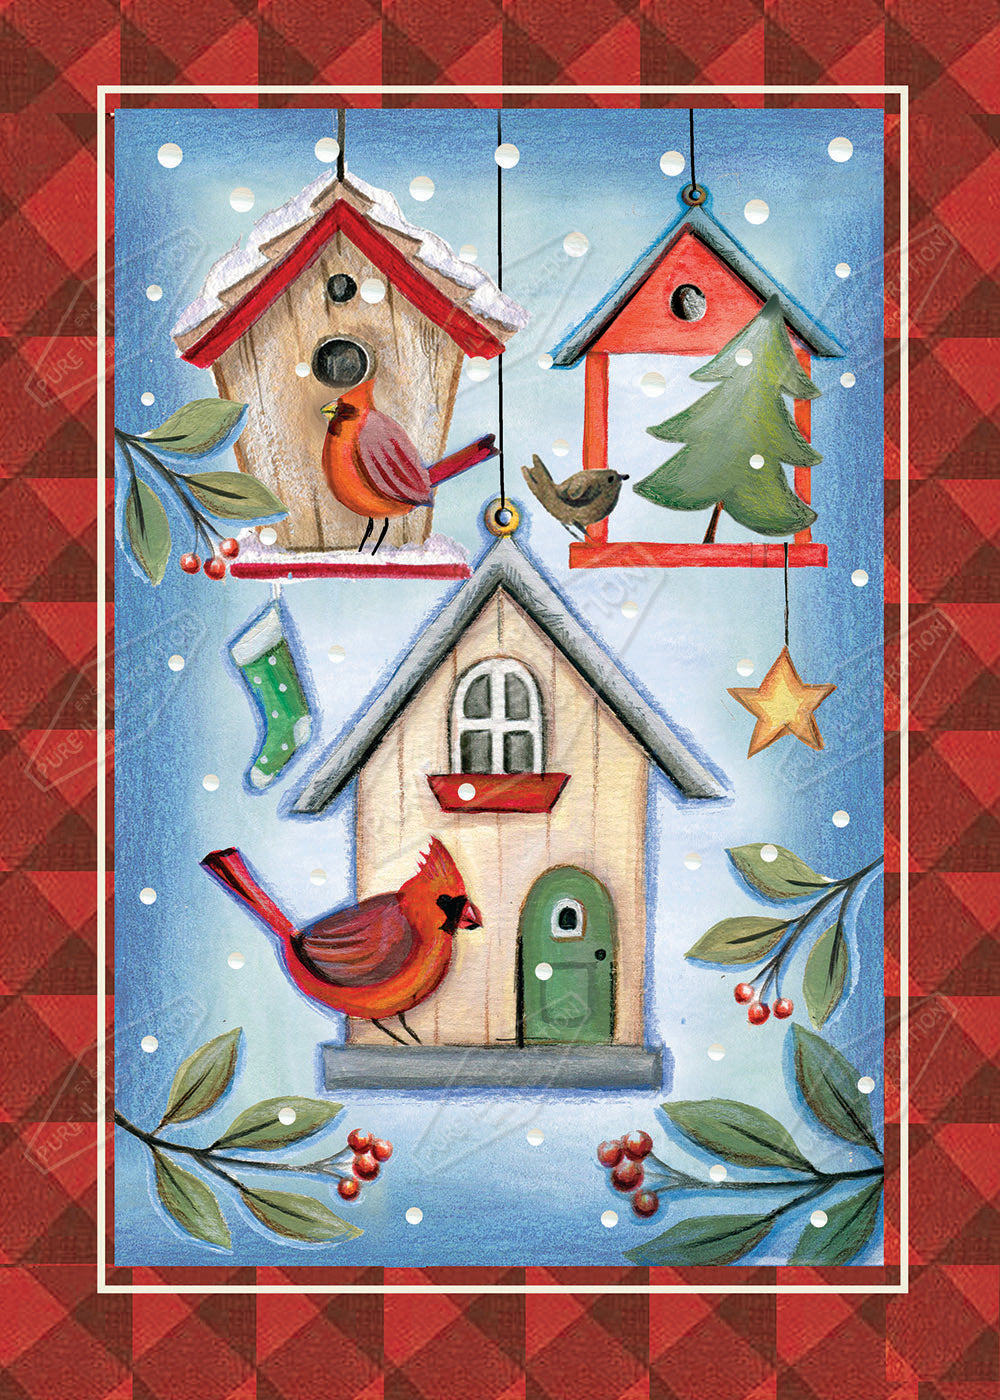 00029451DEV - Deva Evans is represented by Pure Art Licensing Agency - Christmas Greeting Card Design